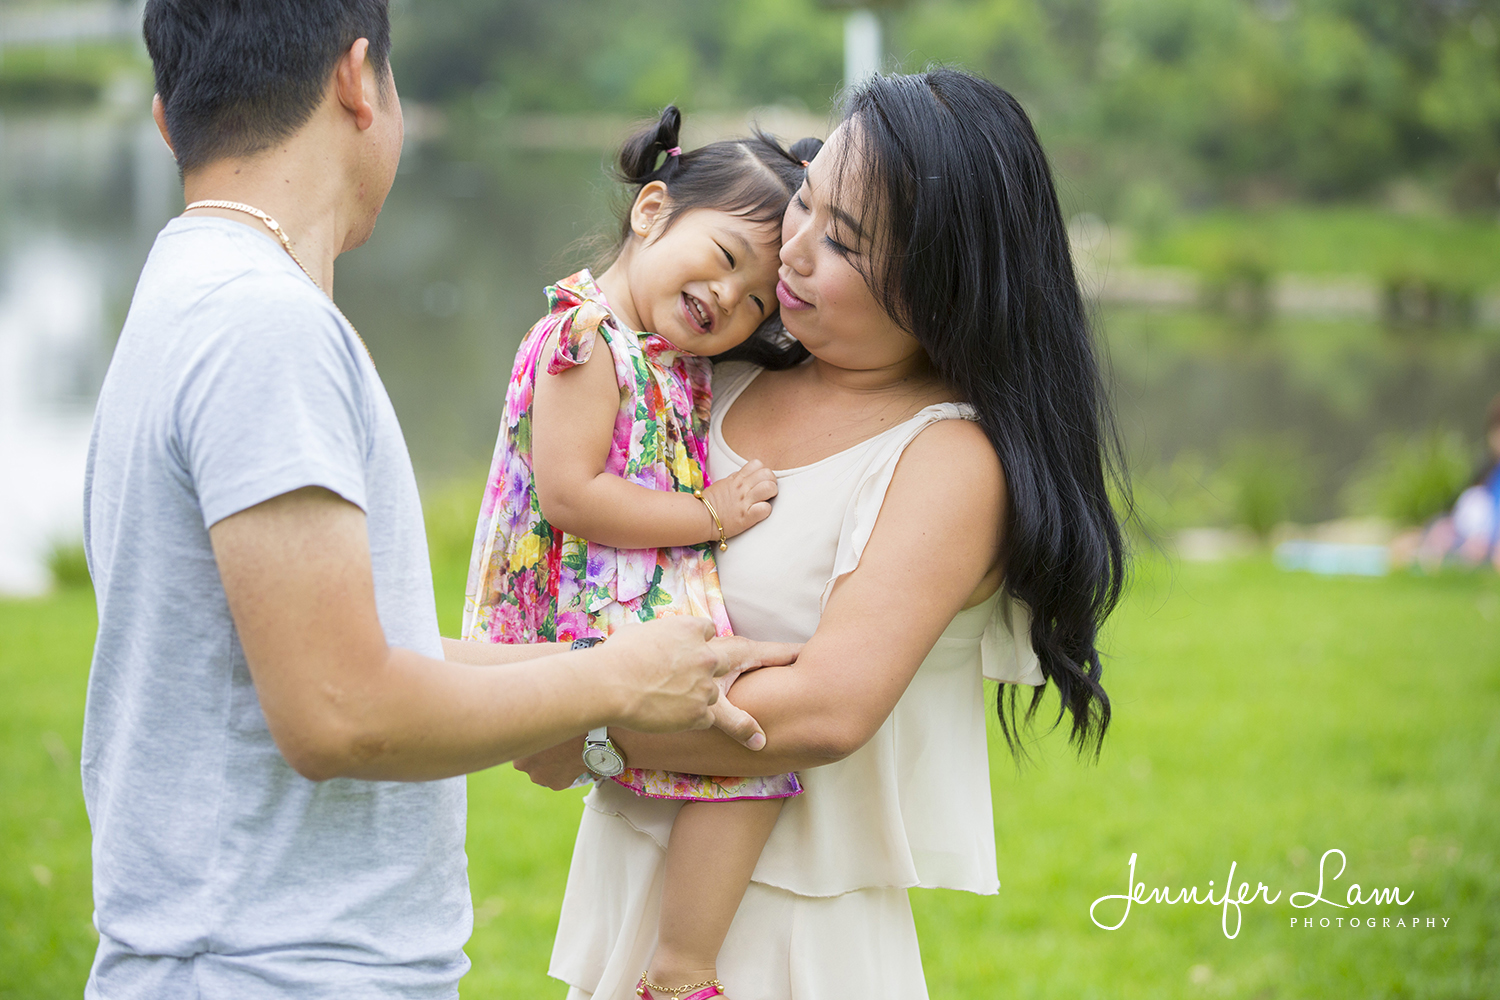 Family Portrait Session - Sydney - Jennifer Lam Photography (5).jpg